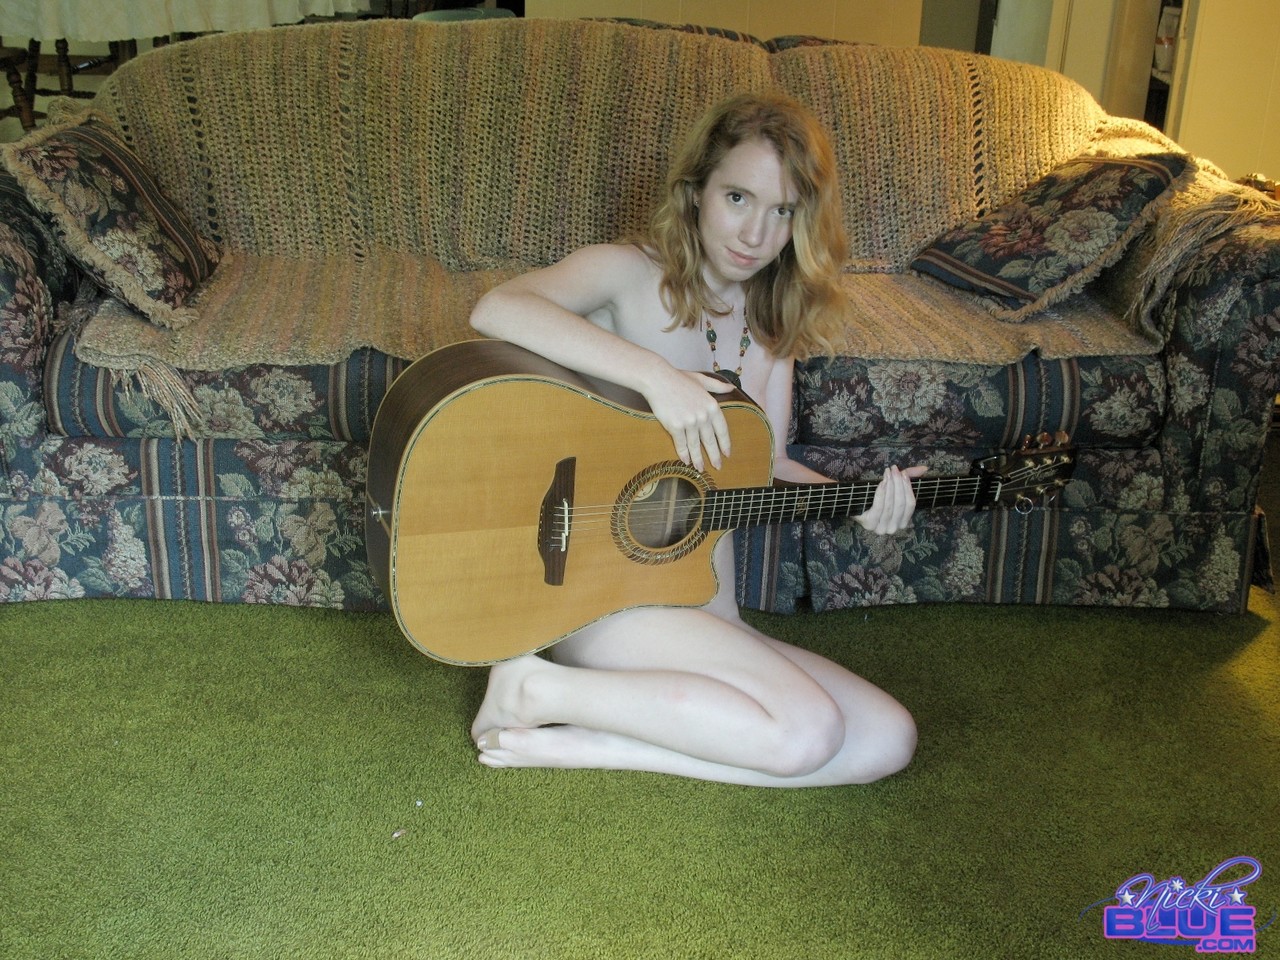 19-year-old babe Nicki Blue posing nude with a guitar in her hands porno fotoğrafı #424548935 | Pornstar Platinum Pics, Nicki Blue, Redhead, mobil porno